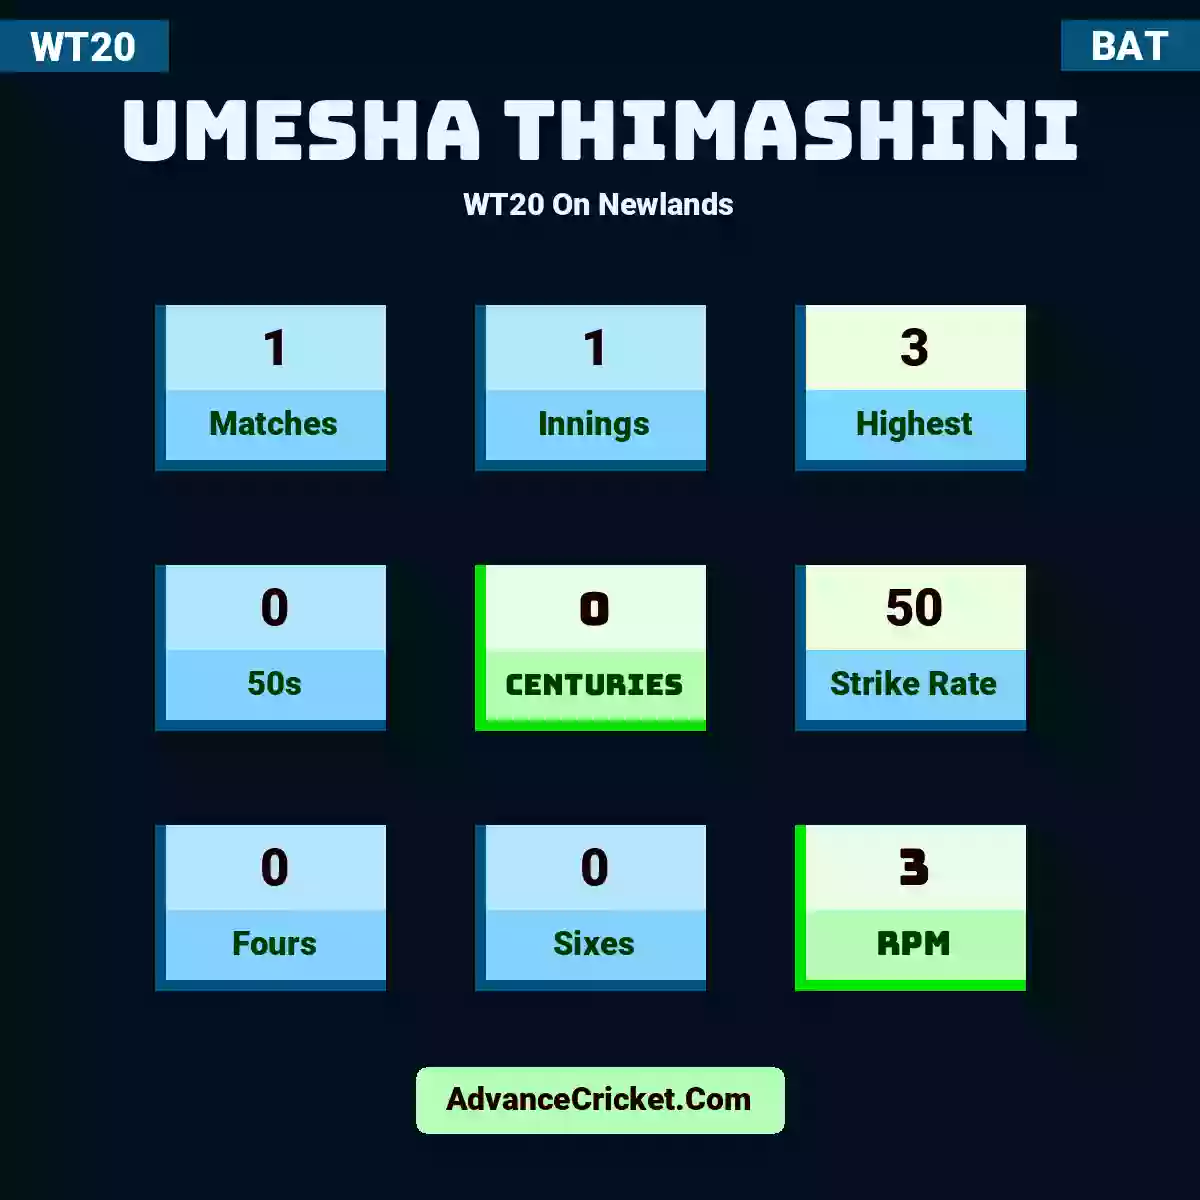 Umesha Thimashini WT20  On Newlands, Umesha Thimashini played 1 matches, scored 3 runs as highest, 0 half-centuries, and 0 centuries, with a strike rate of 50. U.Thimashini hit 0 fours and 0 sixes, with an RPM of 3.